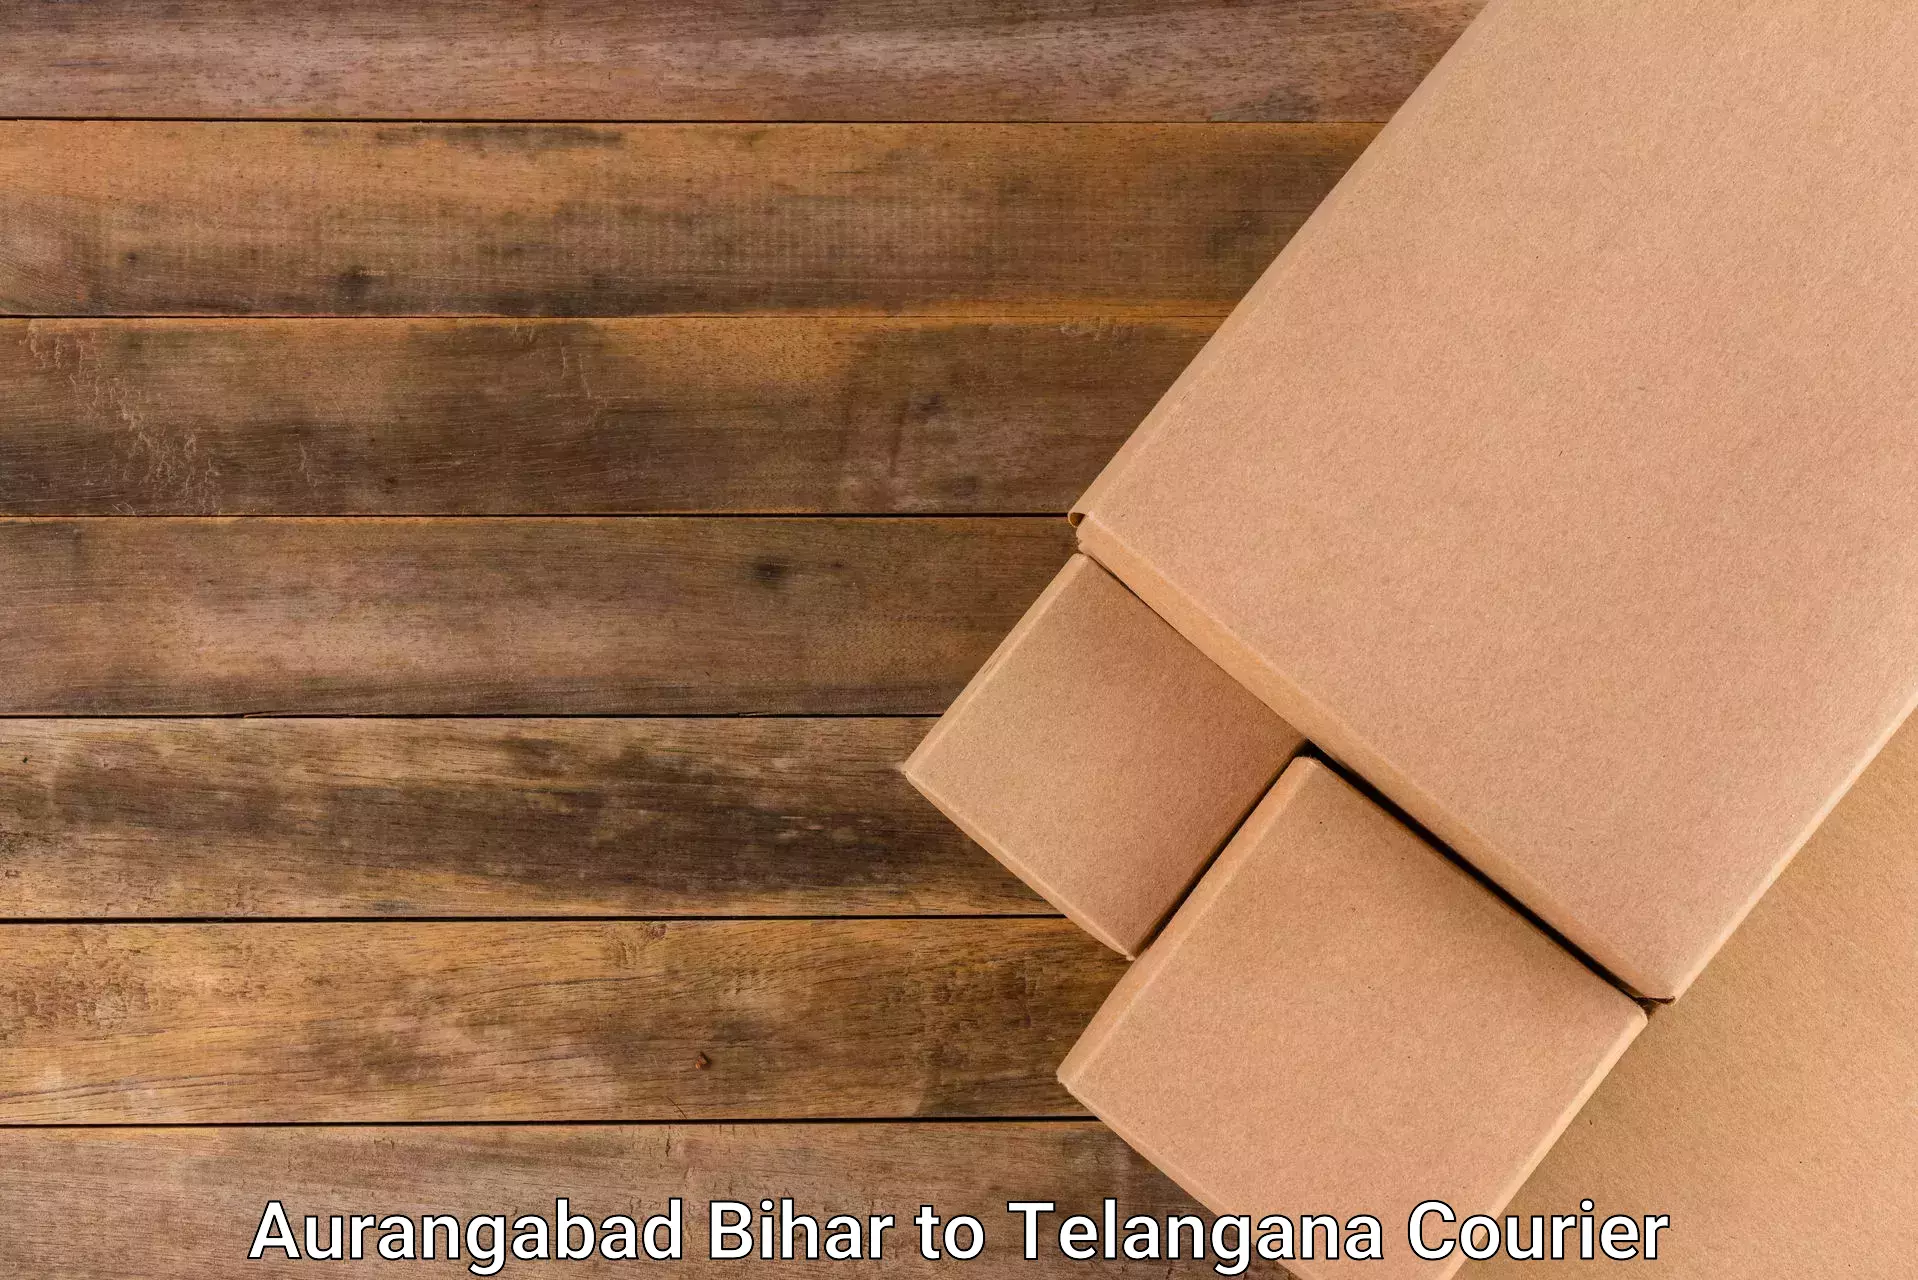 Trackable shipping service Aurangabad Bihar to Telangana